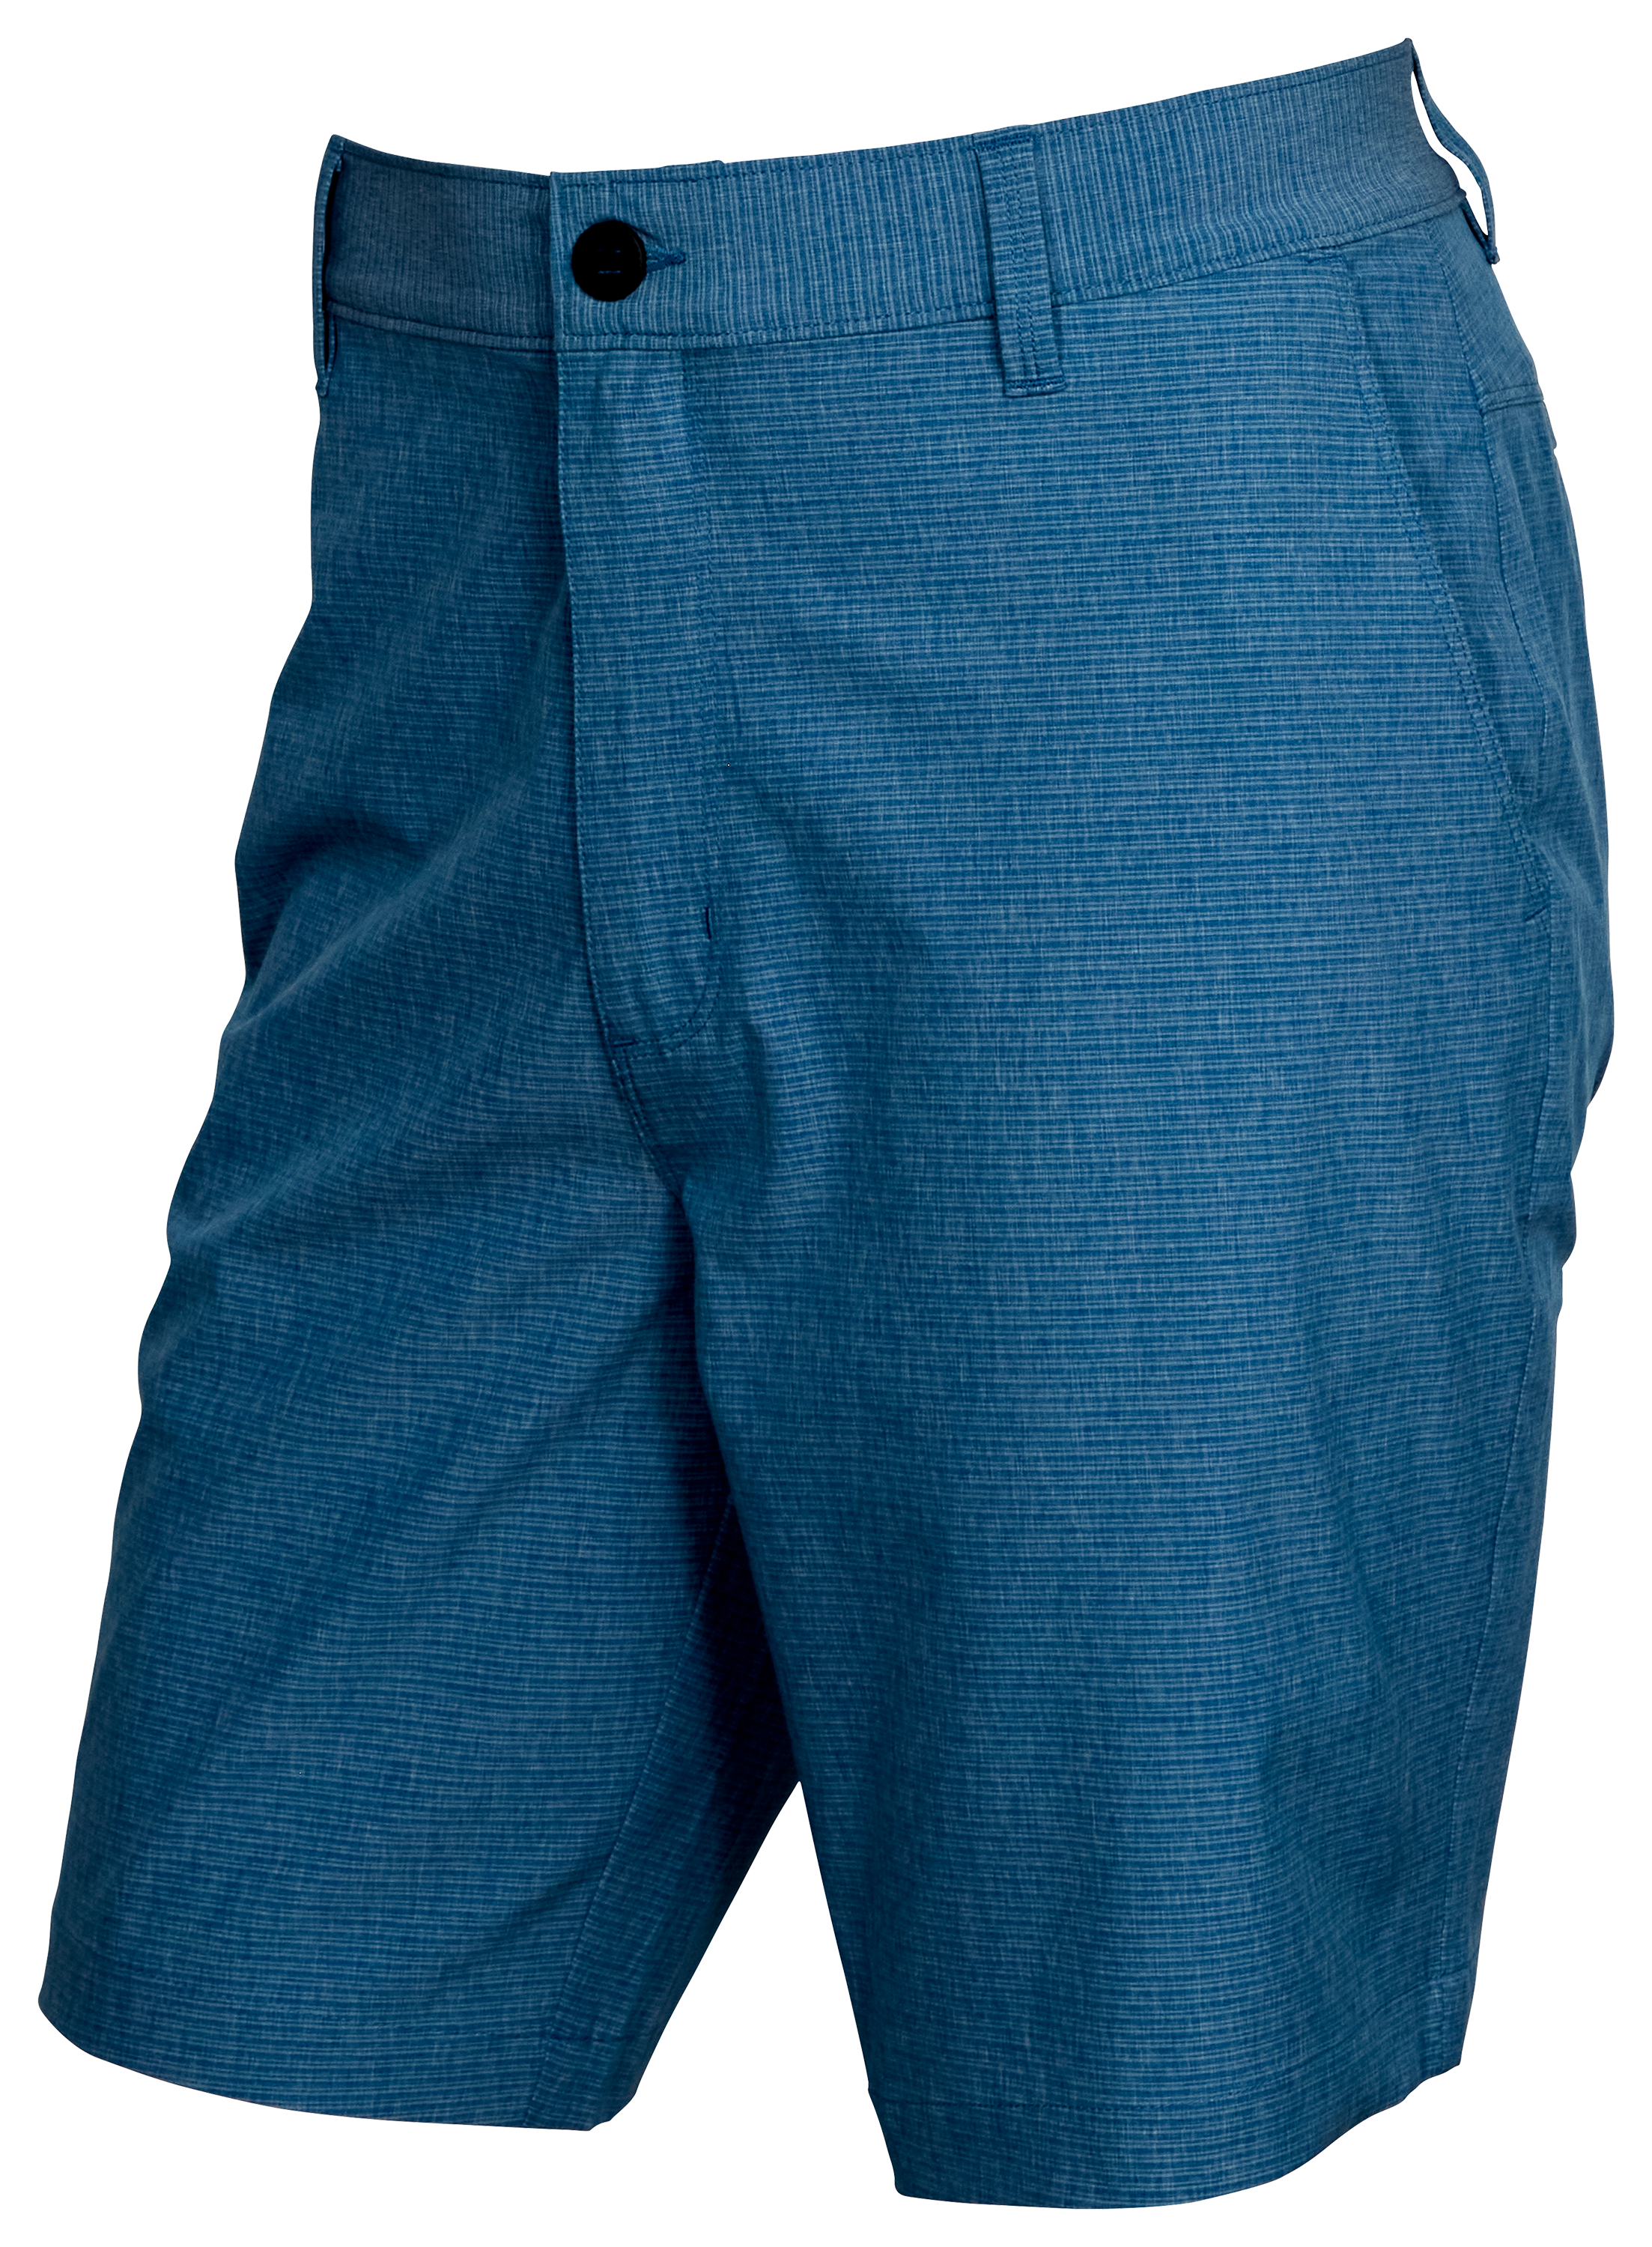 World Wide Sportsman Pescador Stretch Fishing Shorts for Men - Vallarta Blue Stripe - 32